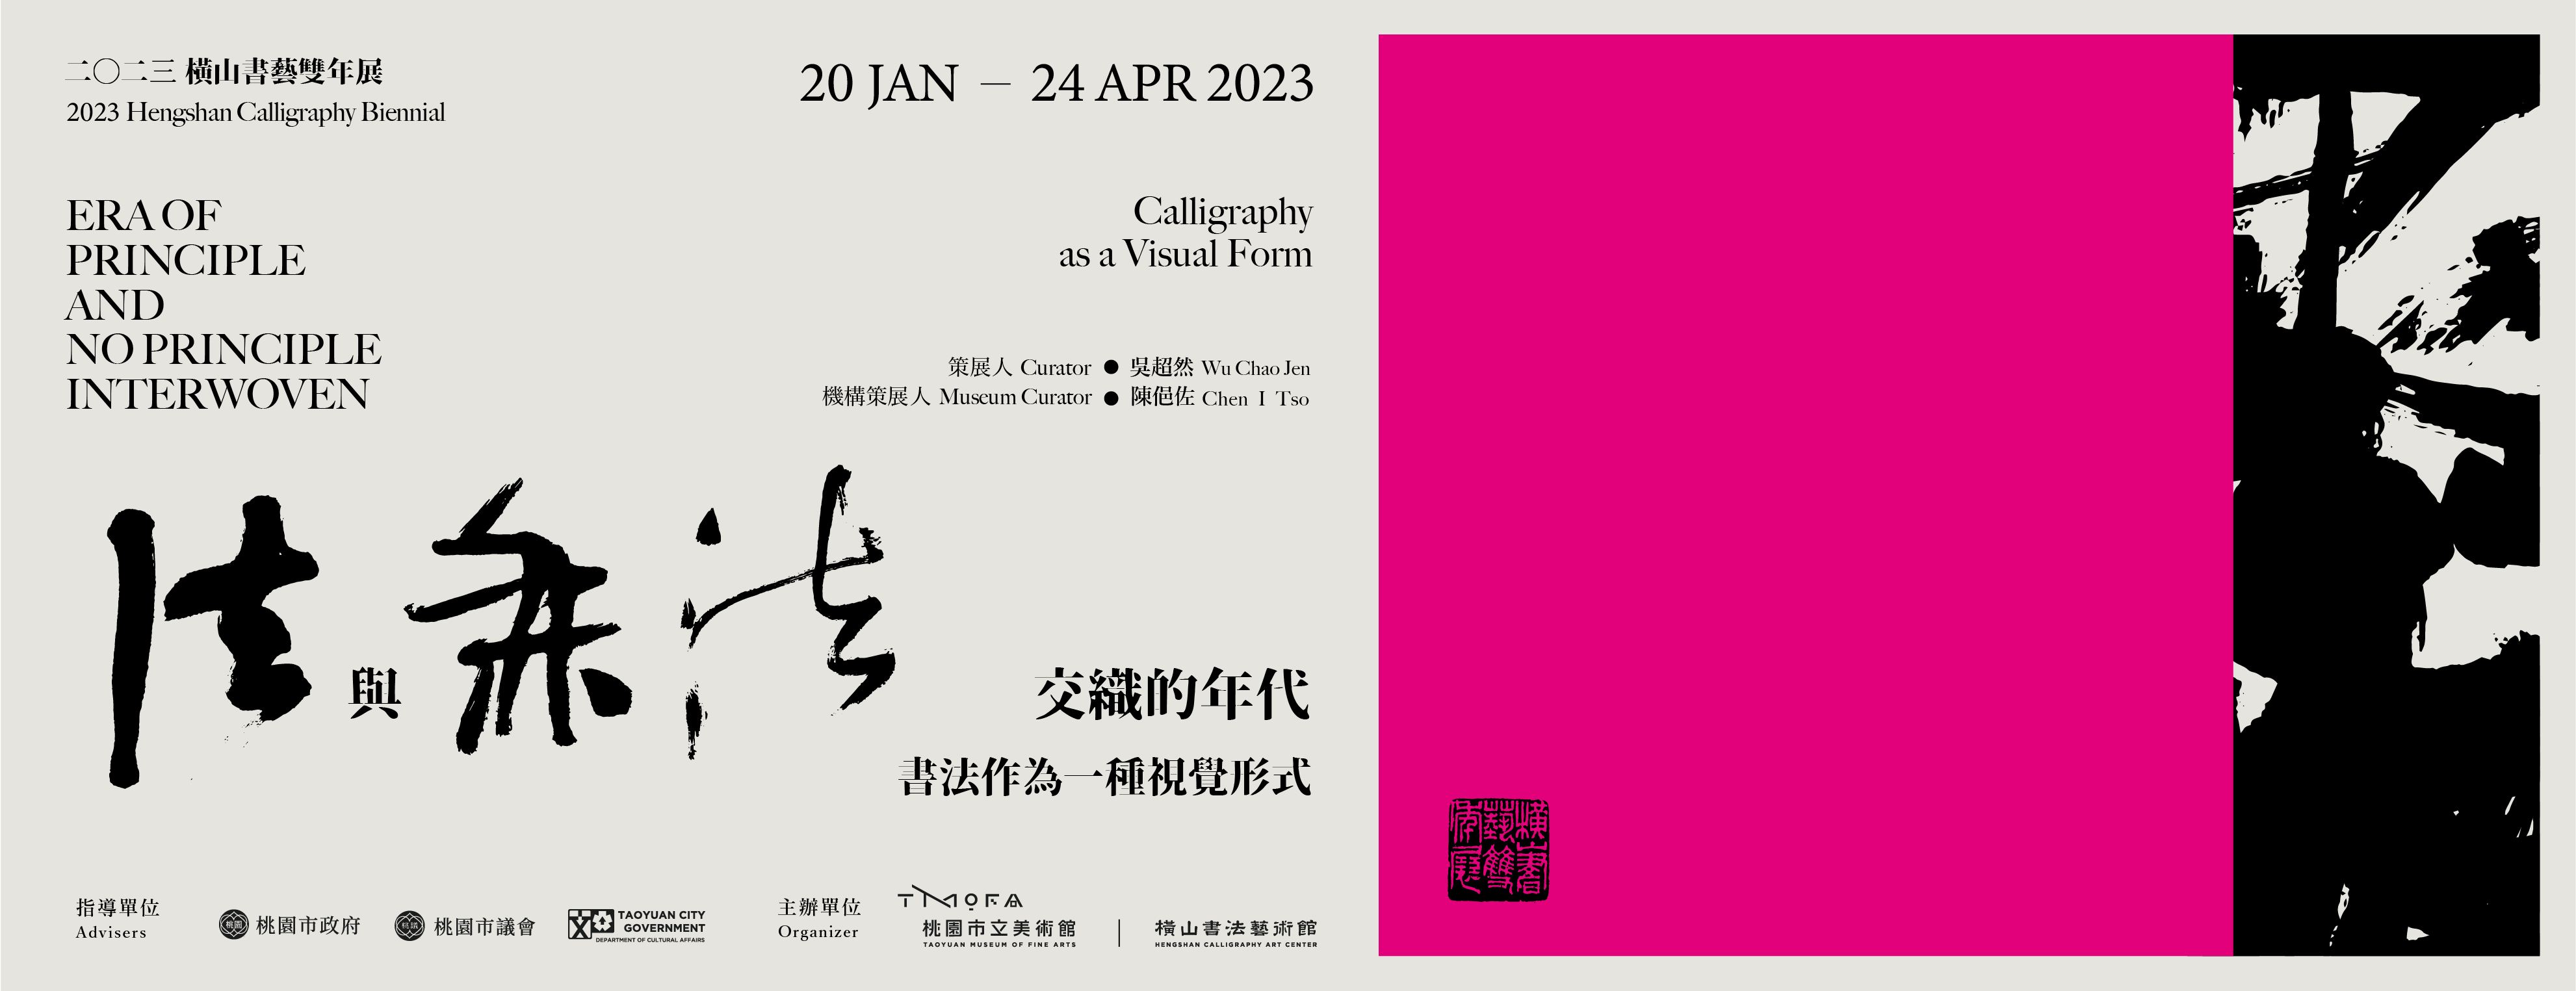 2023 Hengshan Calligraphy Biennial Exhibition: Era of Principle and No Principle Interwoven—Calligraphy as a Visual Form